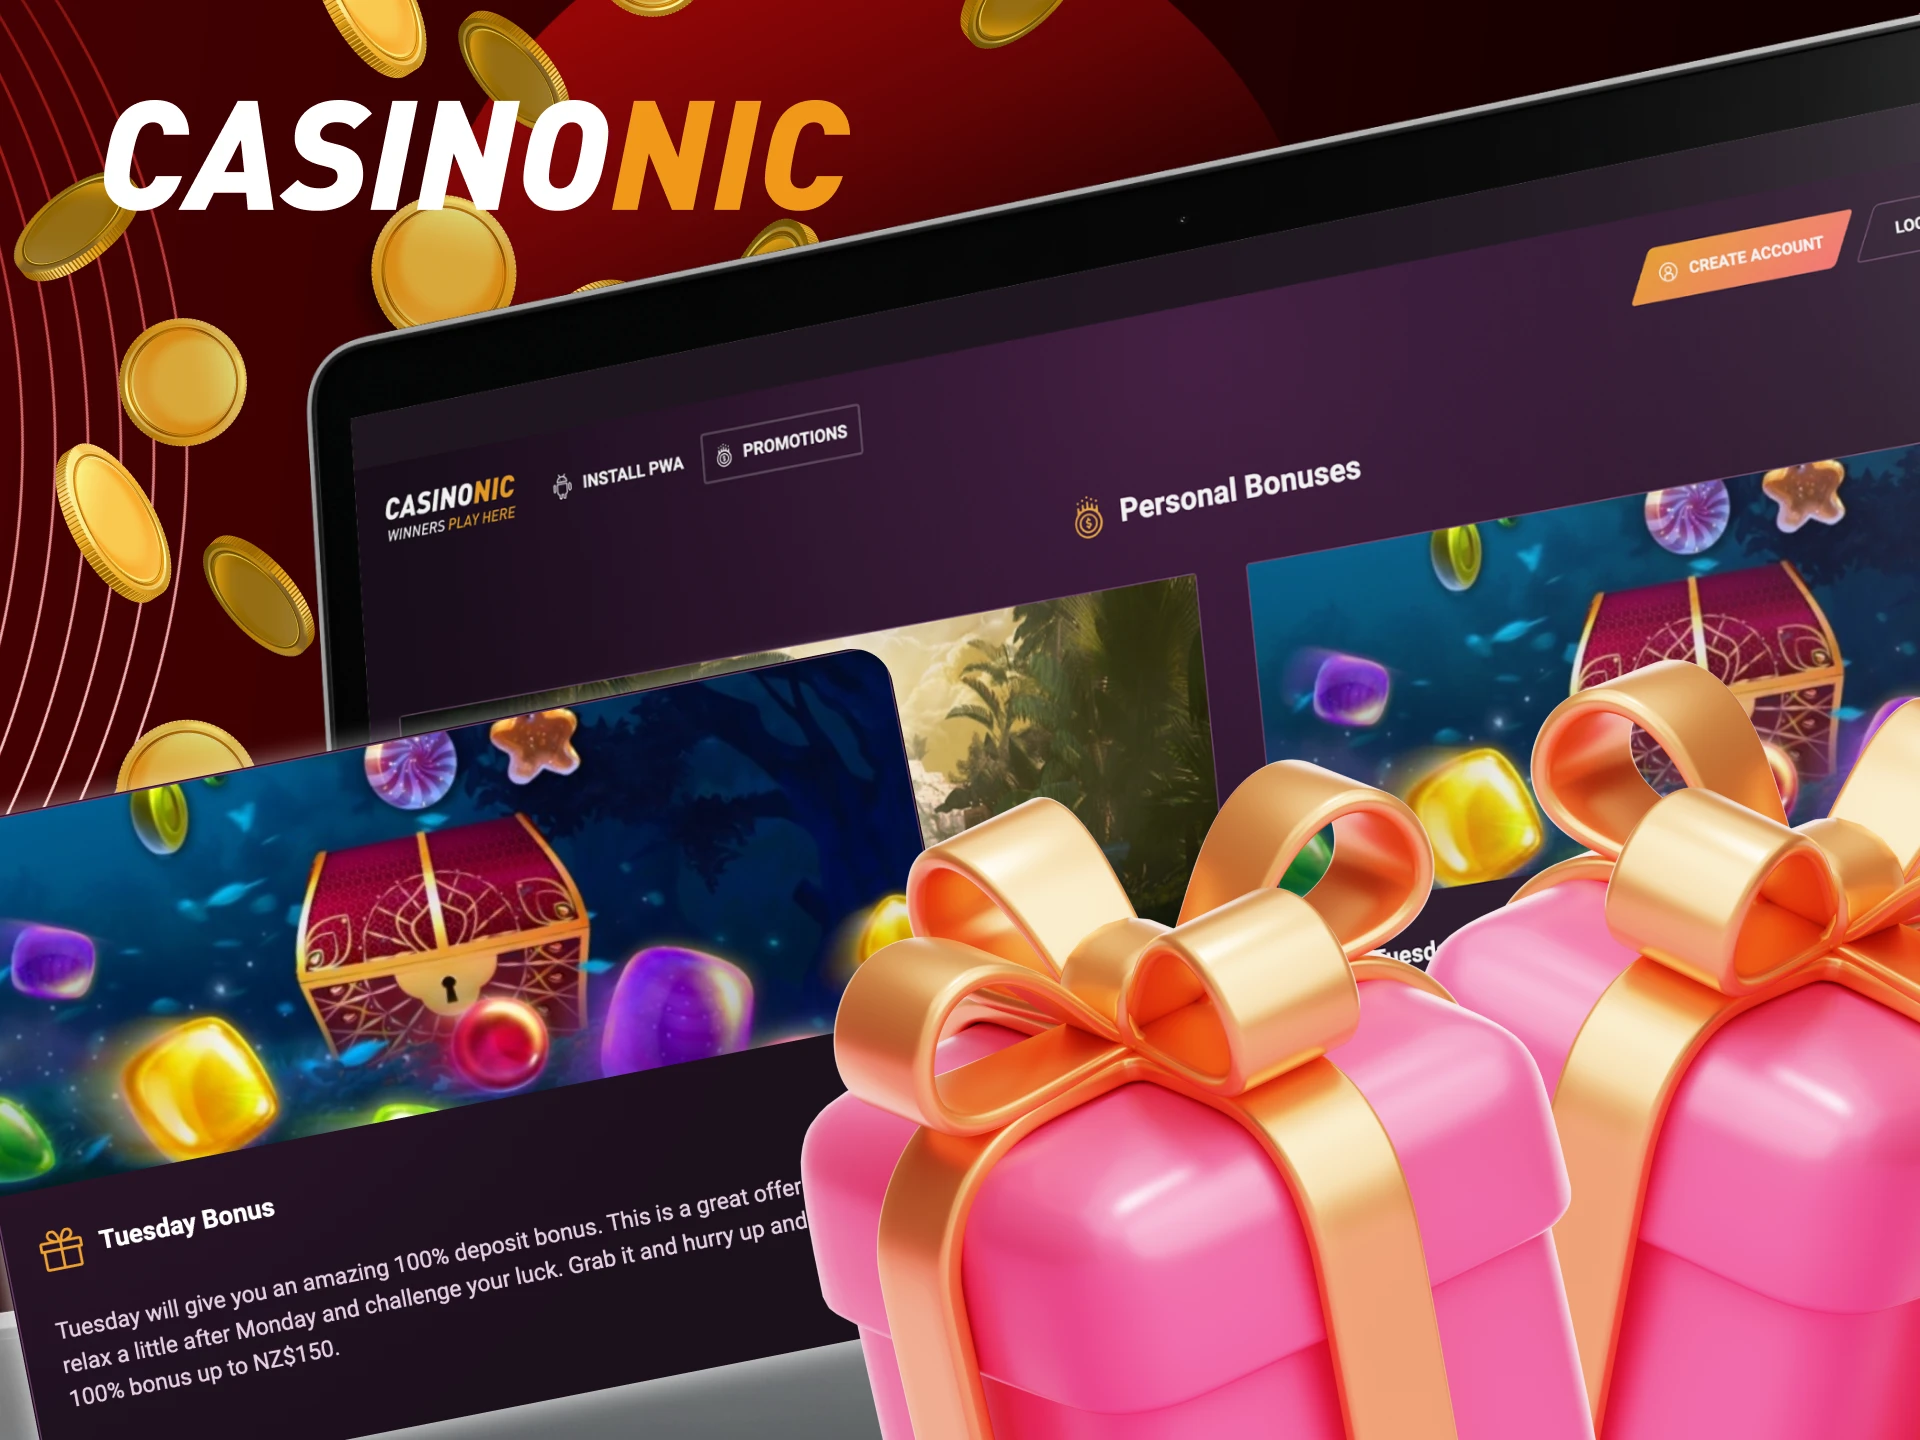 What is Tuesday Bonus in online casino CasinoNic.